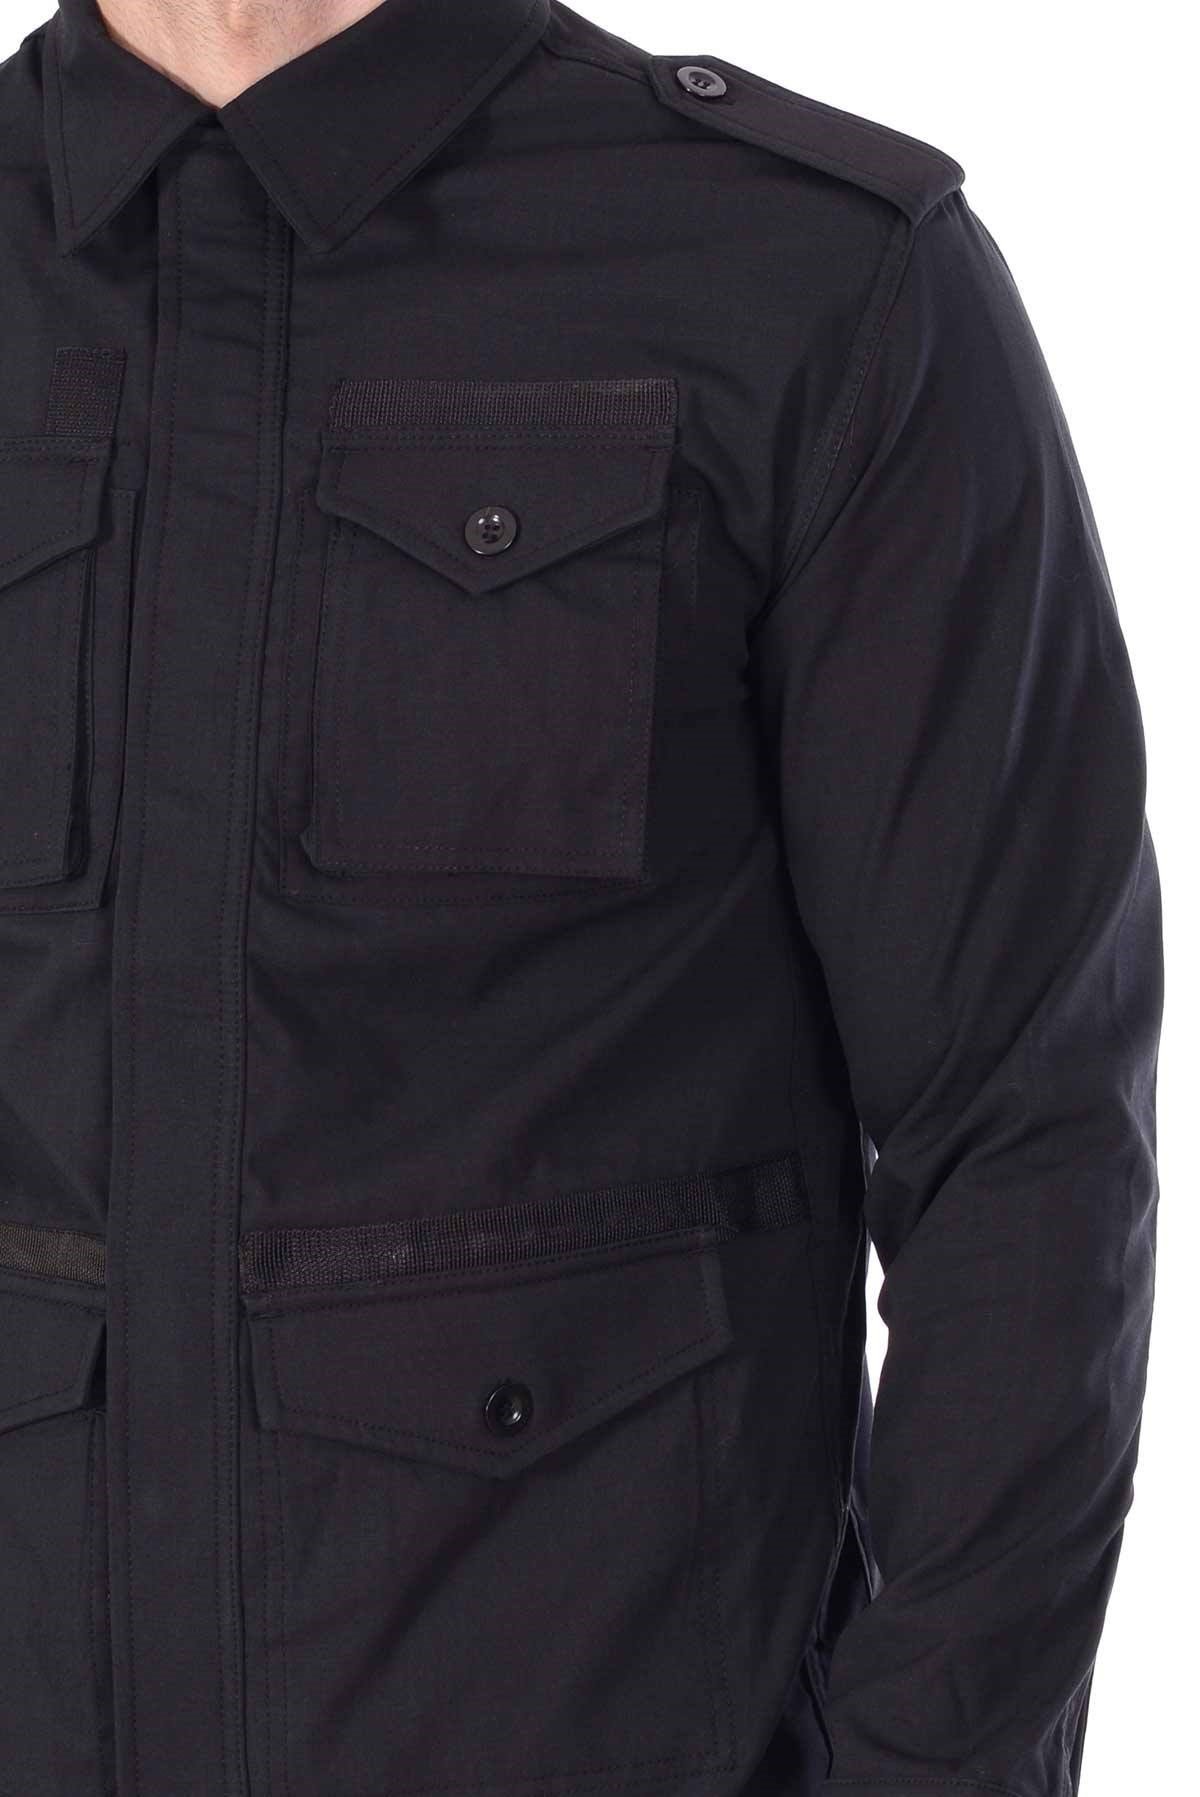 Taktikal Outdoor Ceket Siyah-TC02 - Polis Sepeti